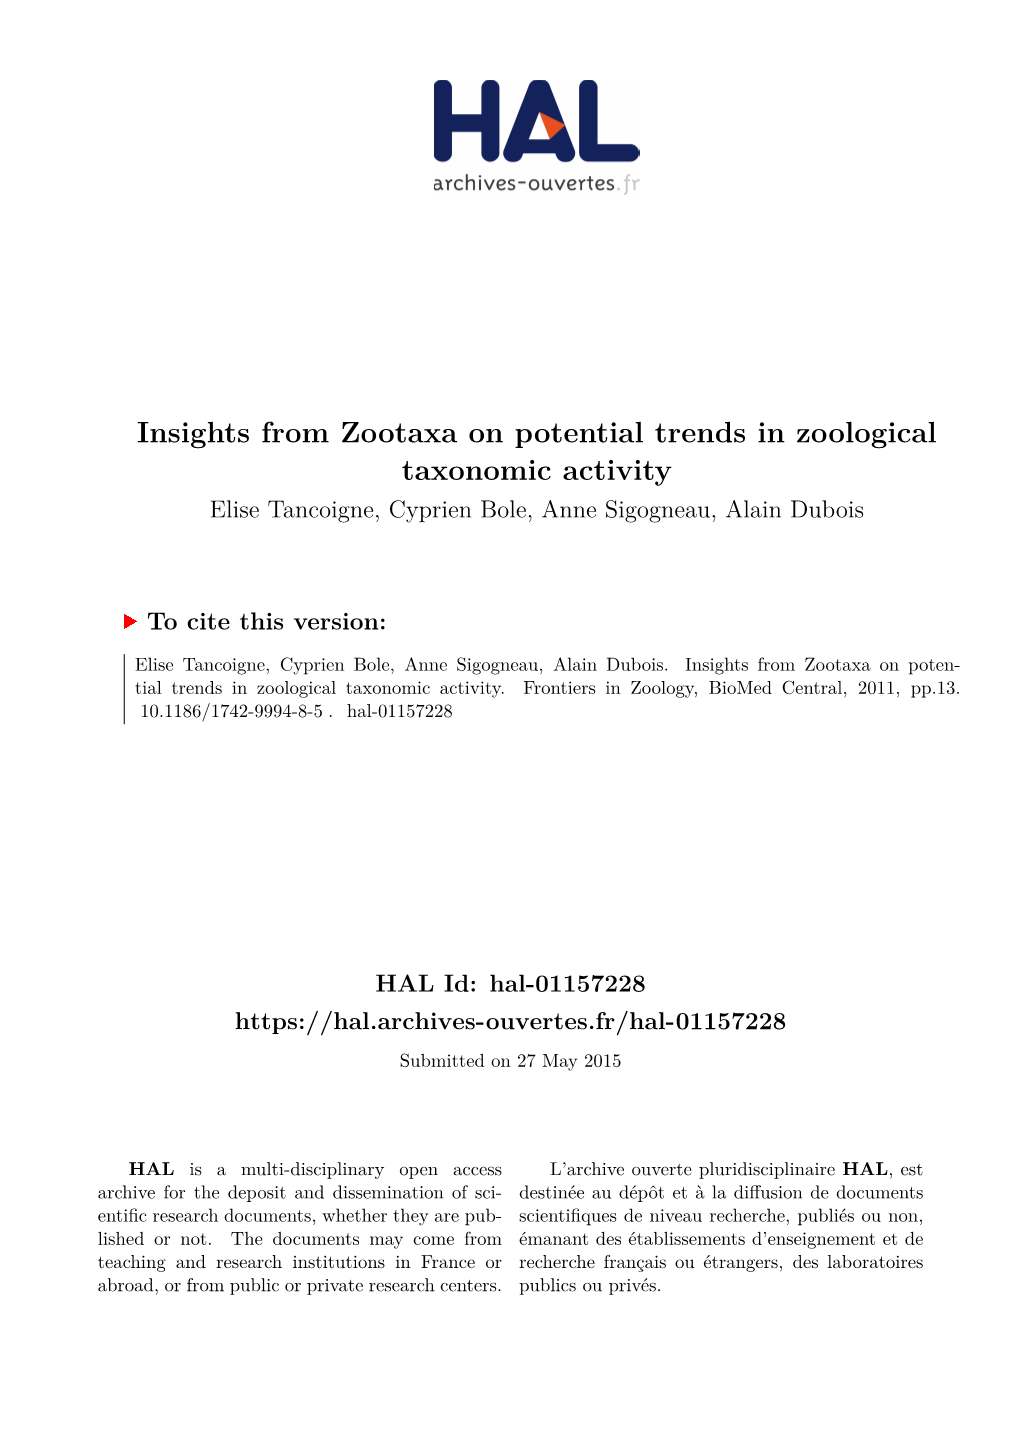 Insights from Zootaxa on Potential Trends in Zoological Taxonomic Activity Elise Tancoigne, Cyprien Bole, Anne Sigogneau, Alain Dubois